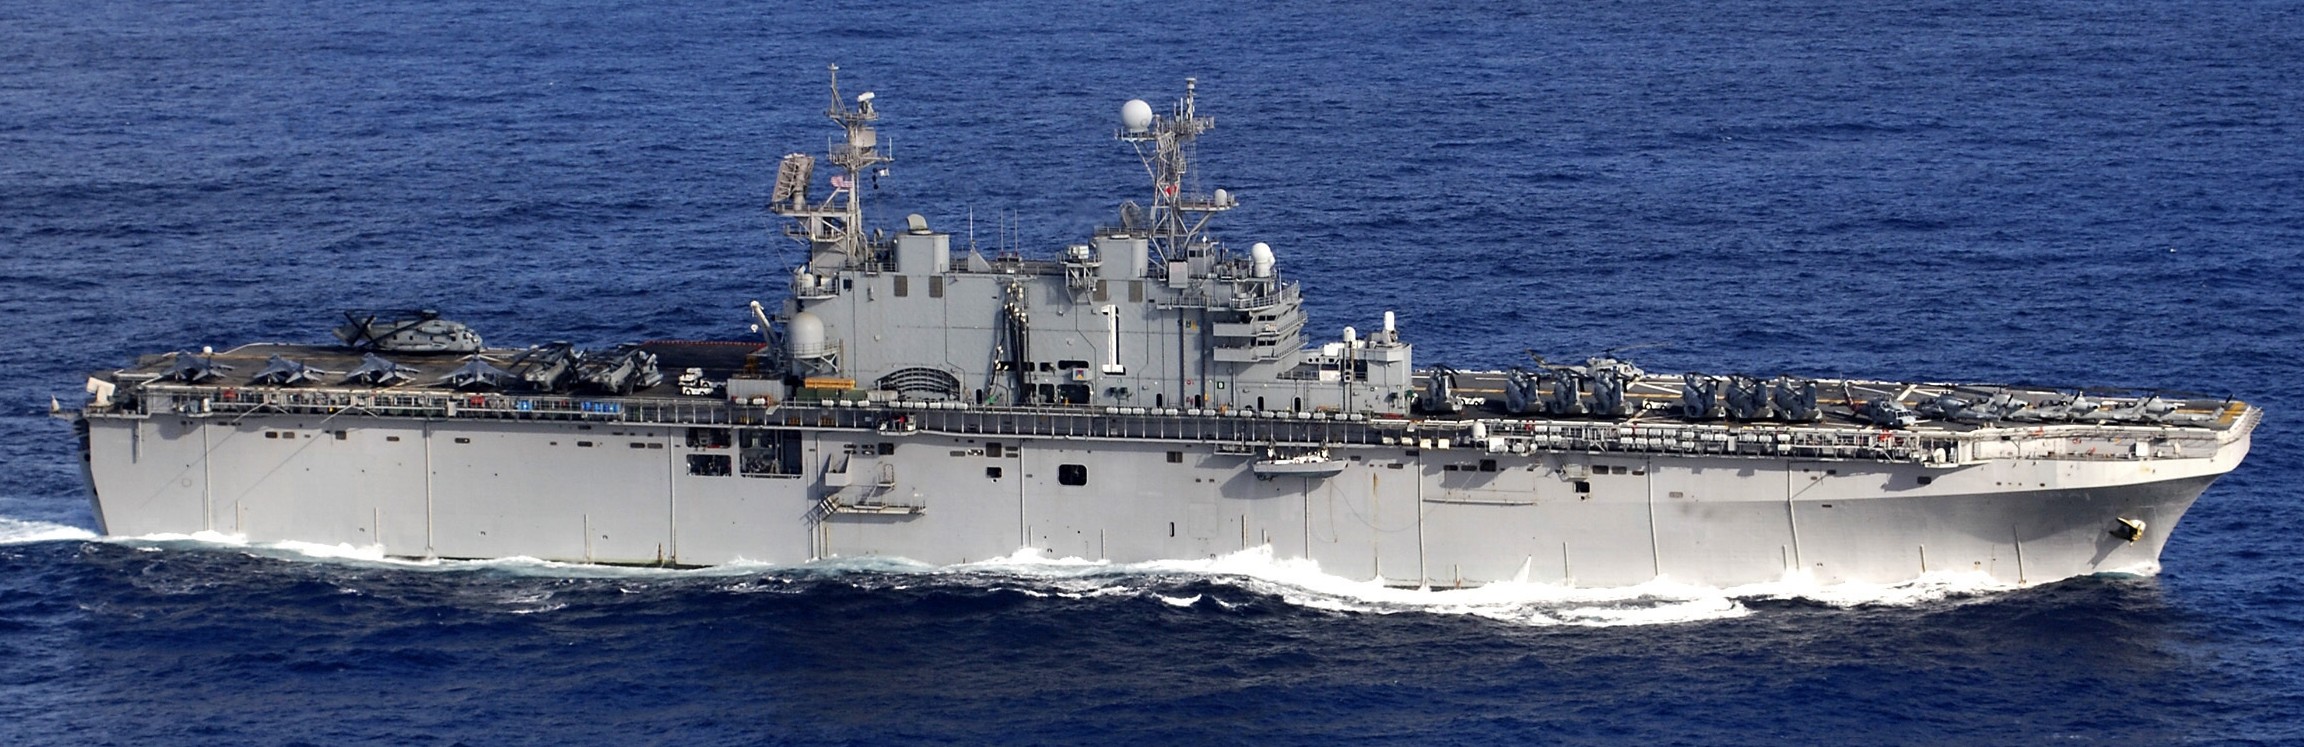 lha-1 uss tarawa amphibious assault ship us navy 11th meu soc marines hmm-166 40